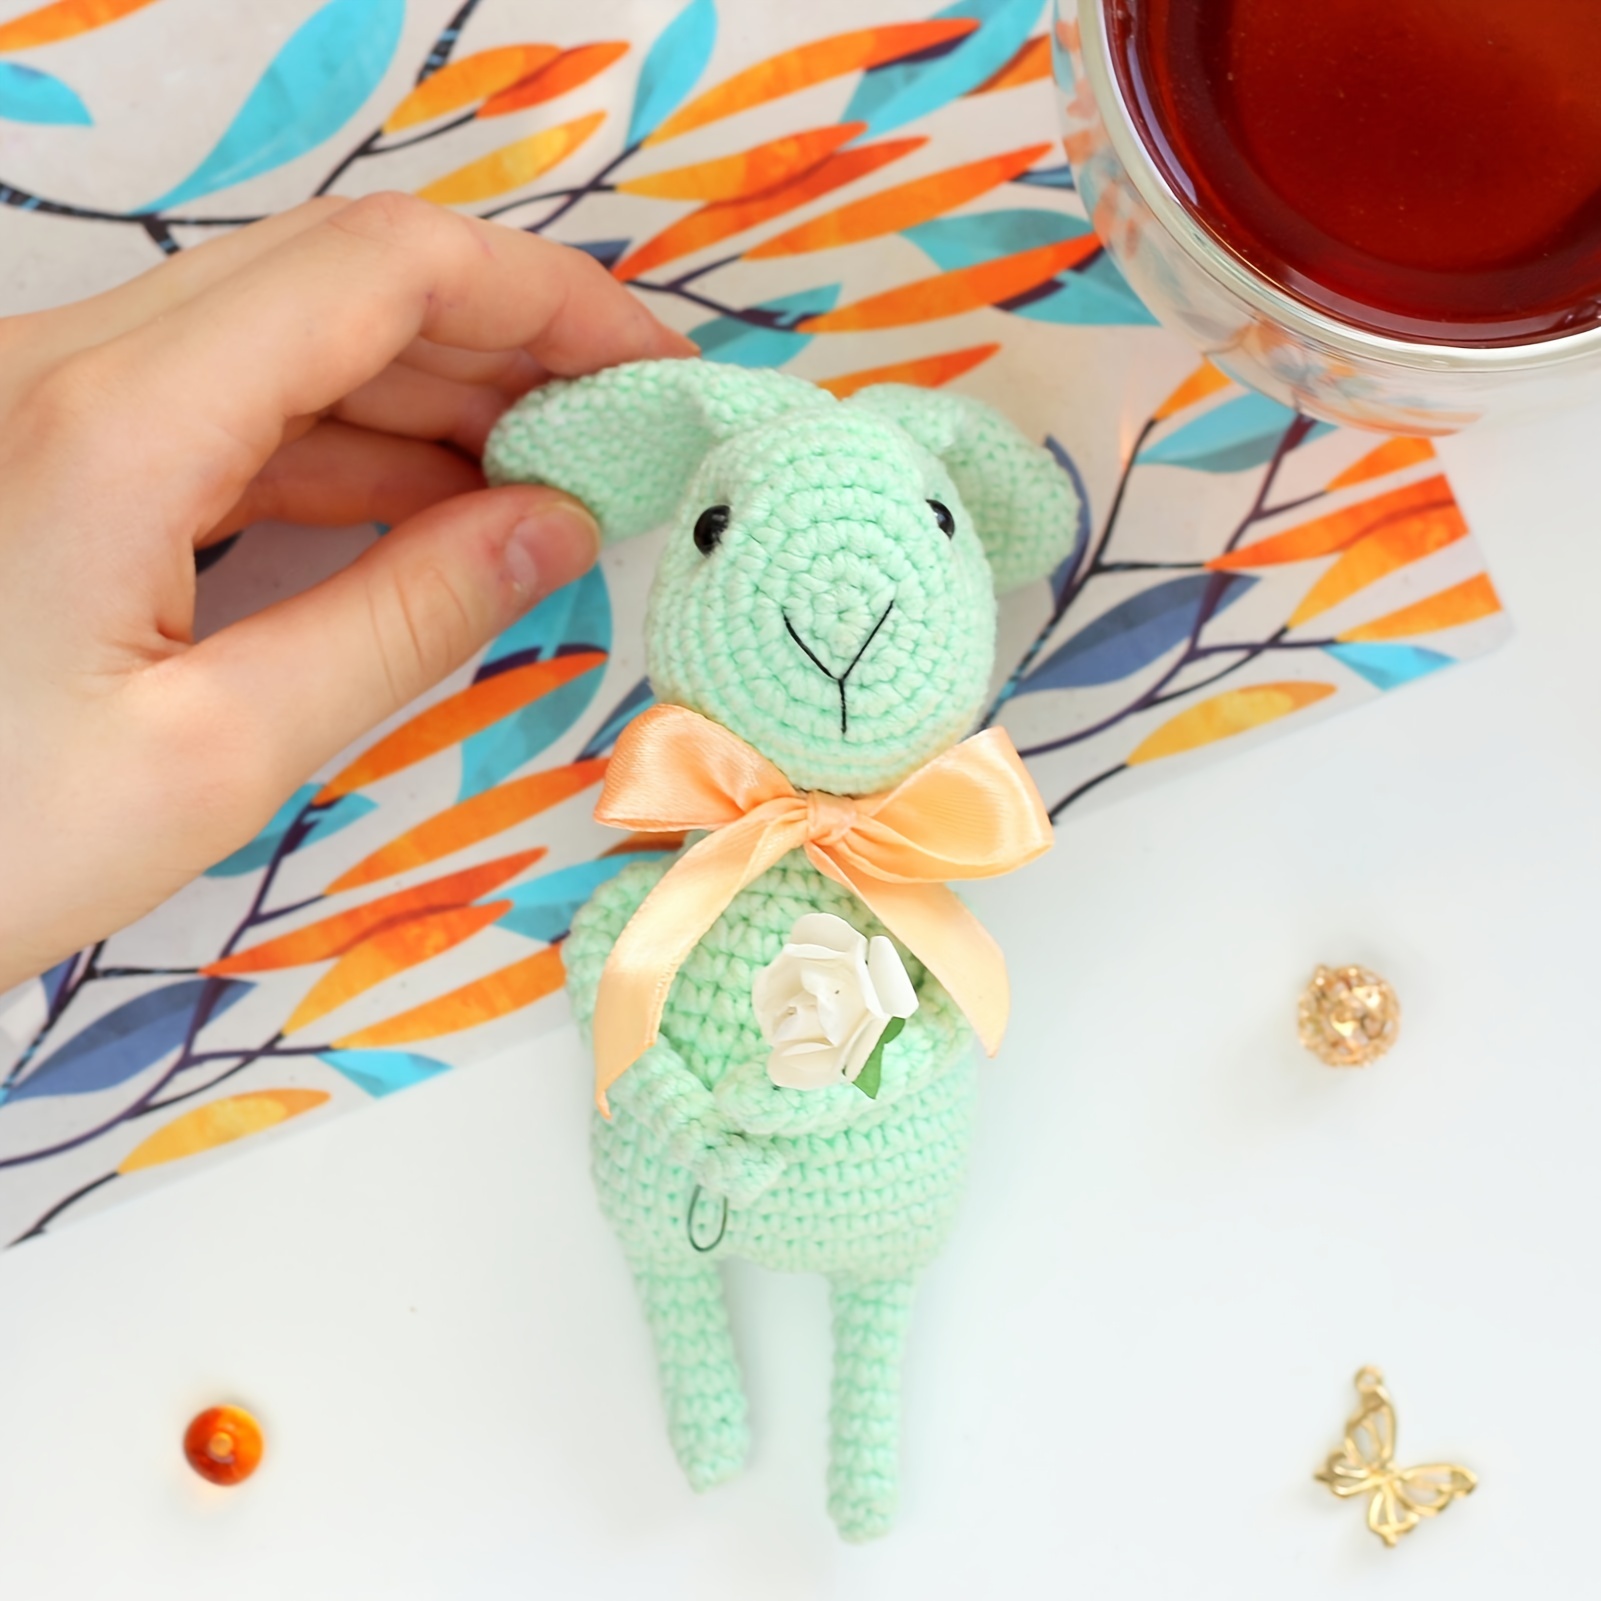 Teddy Bear Eyes, Glue On Googly Eyes - Thimbles Fabric Shop Online